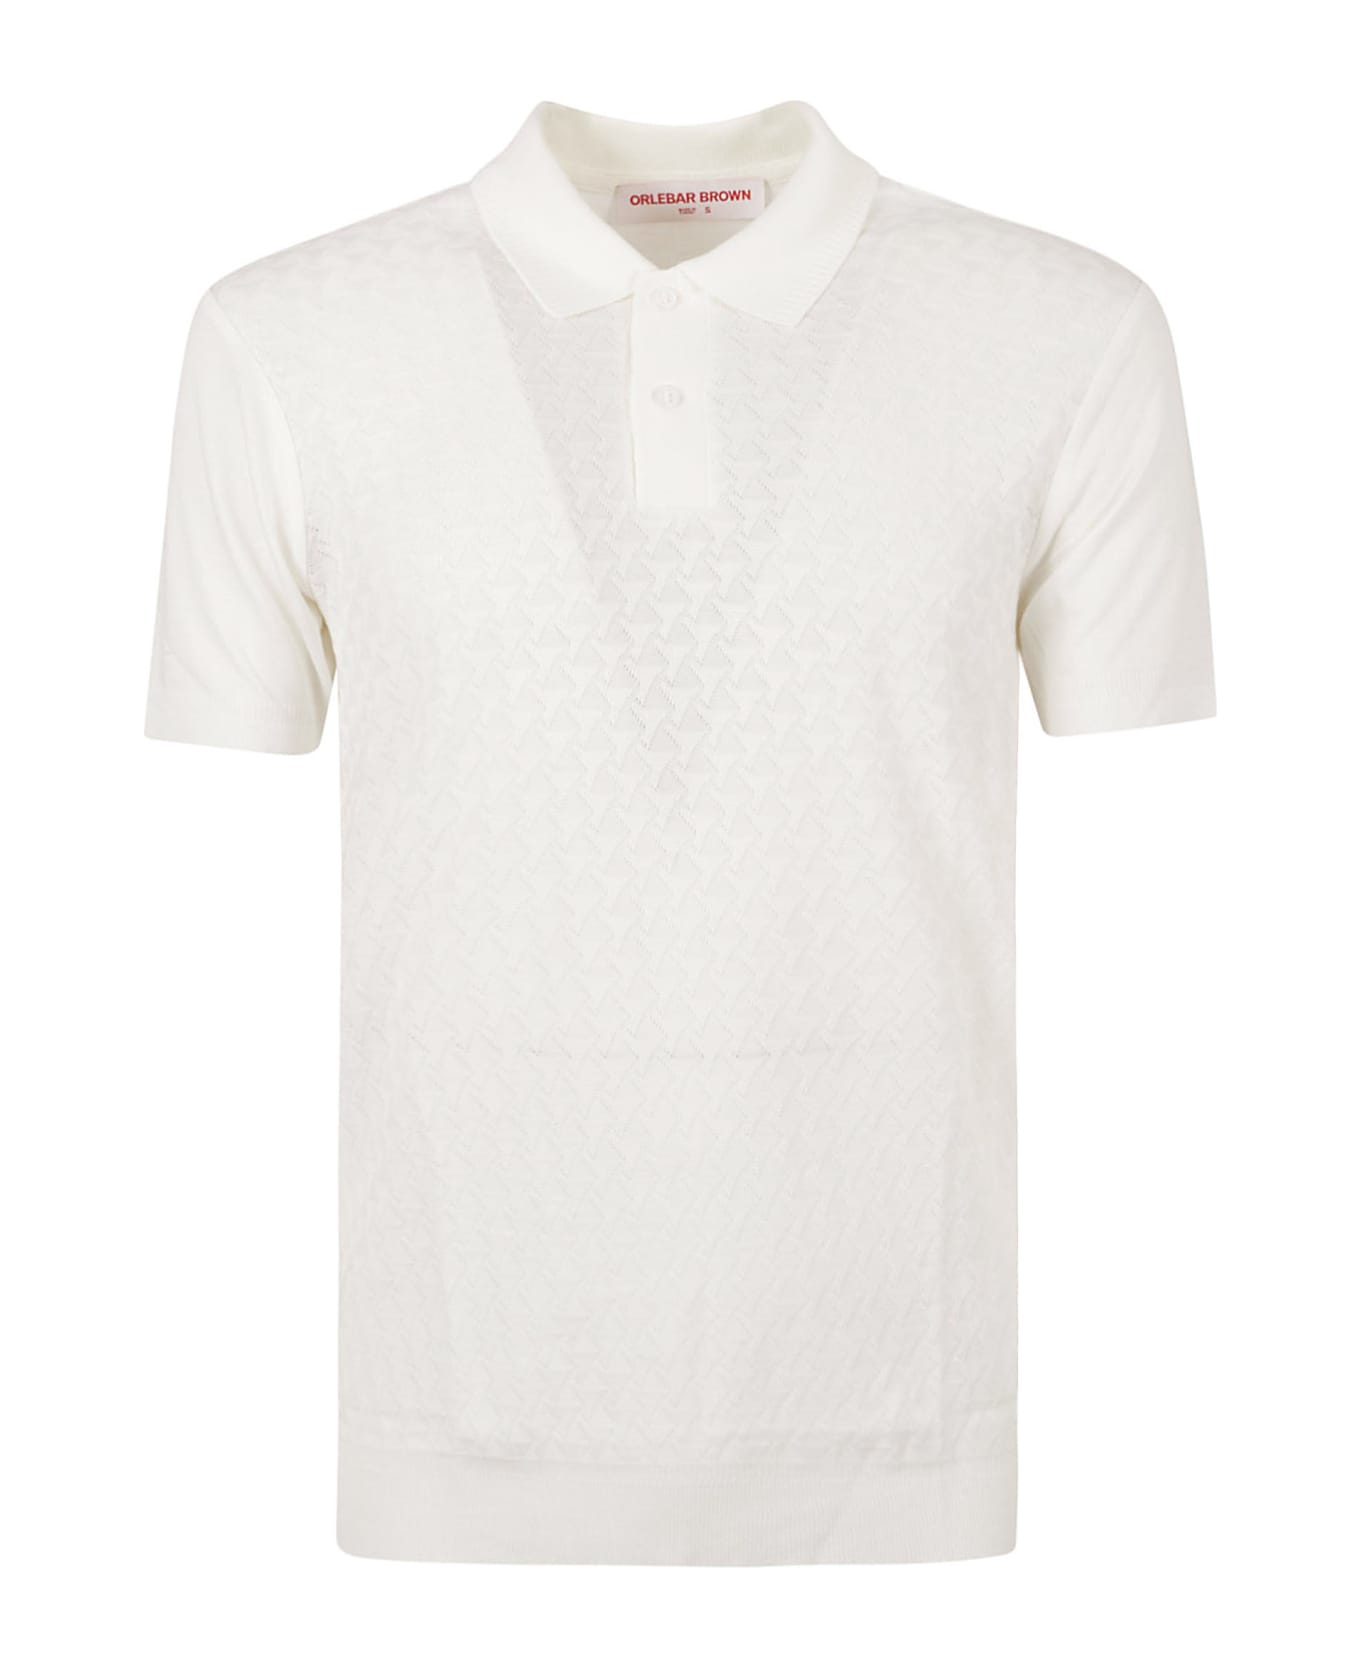 Orlebar Brown Jarrett Jacquard Knit Polo Shirt - White